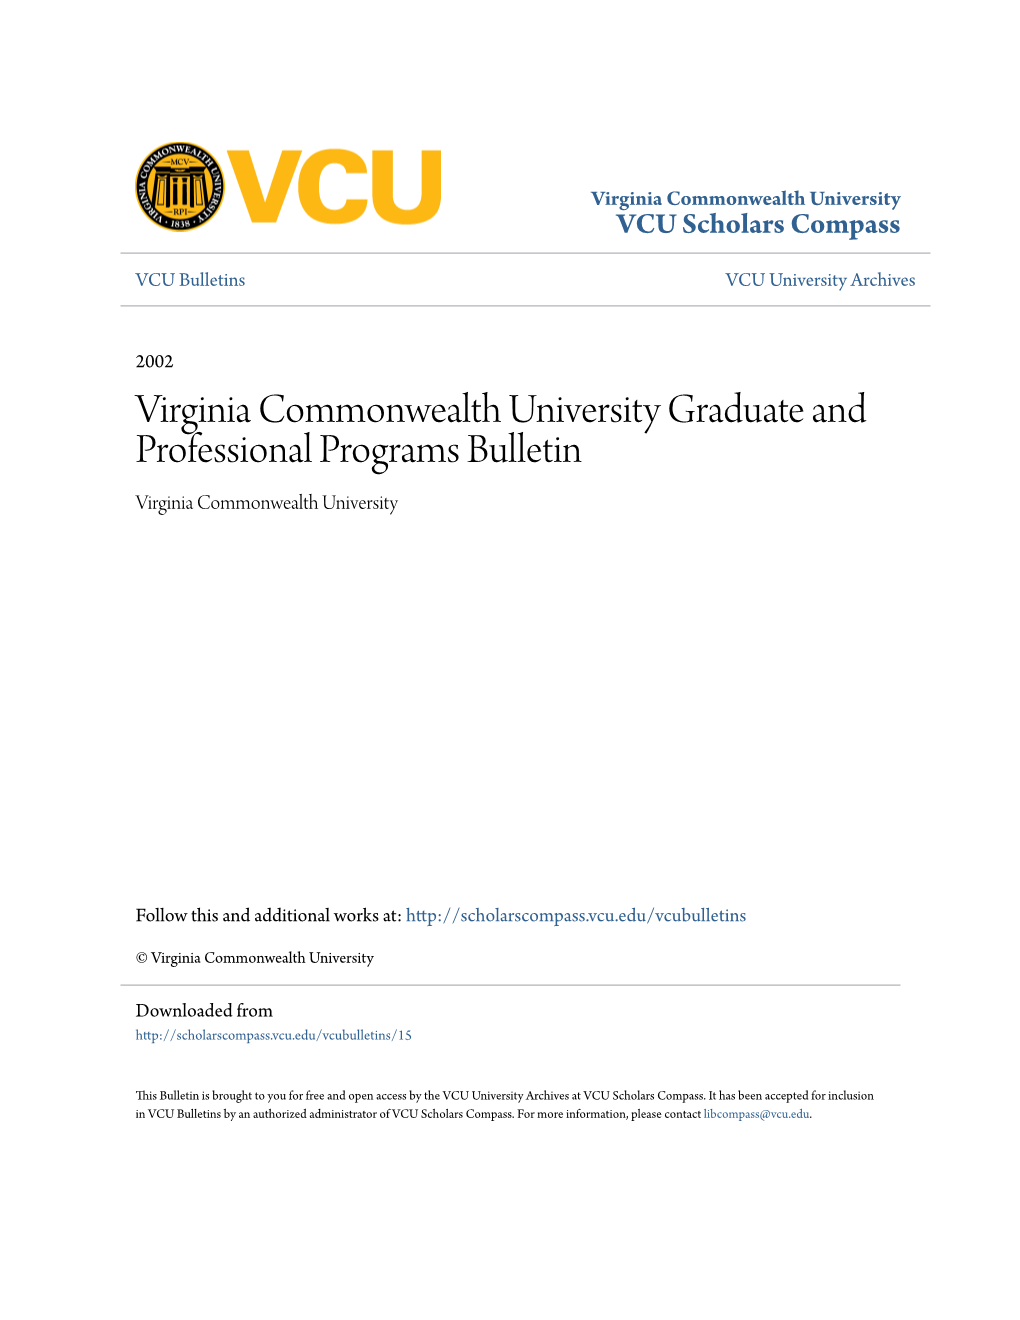 Virginia Commonwealth University Graduate and Professional Programs Bulletin Virginia Commonwealth University